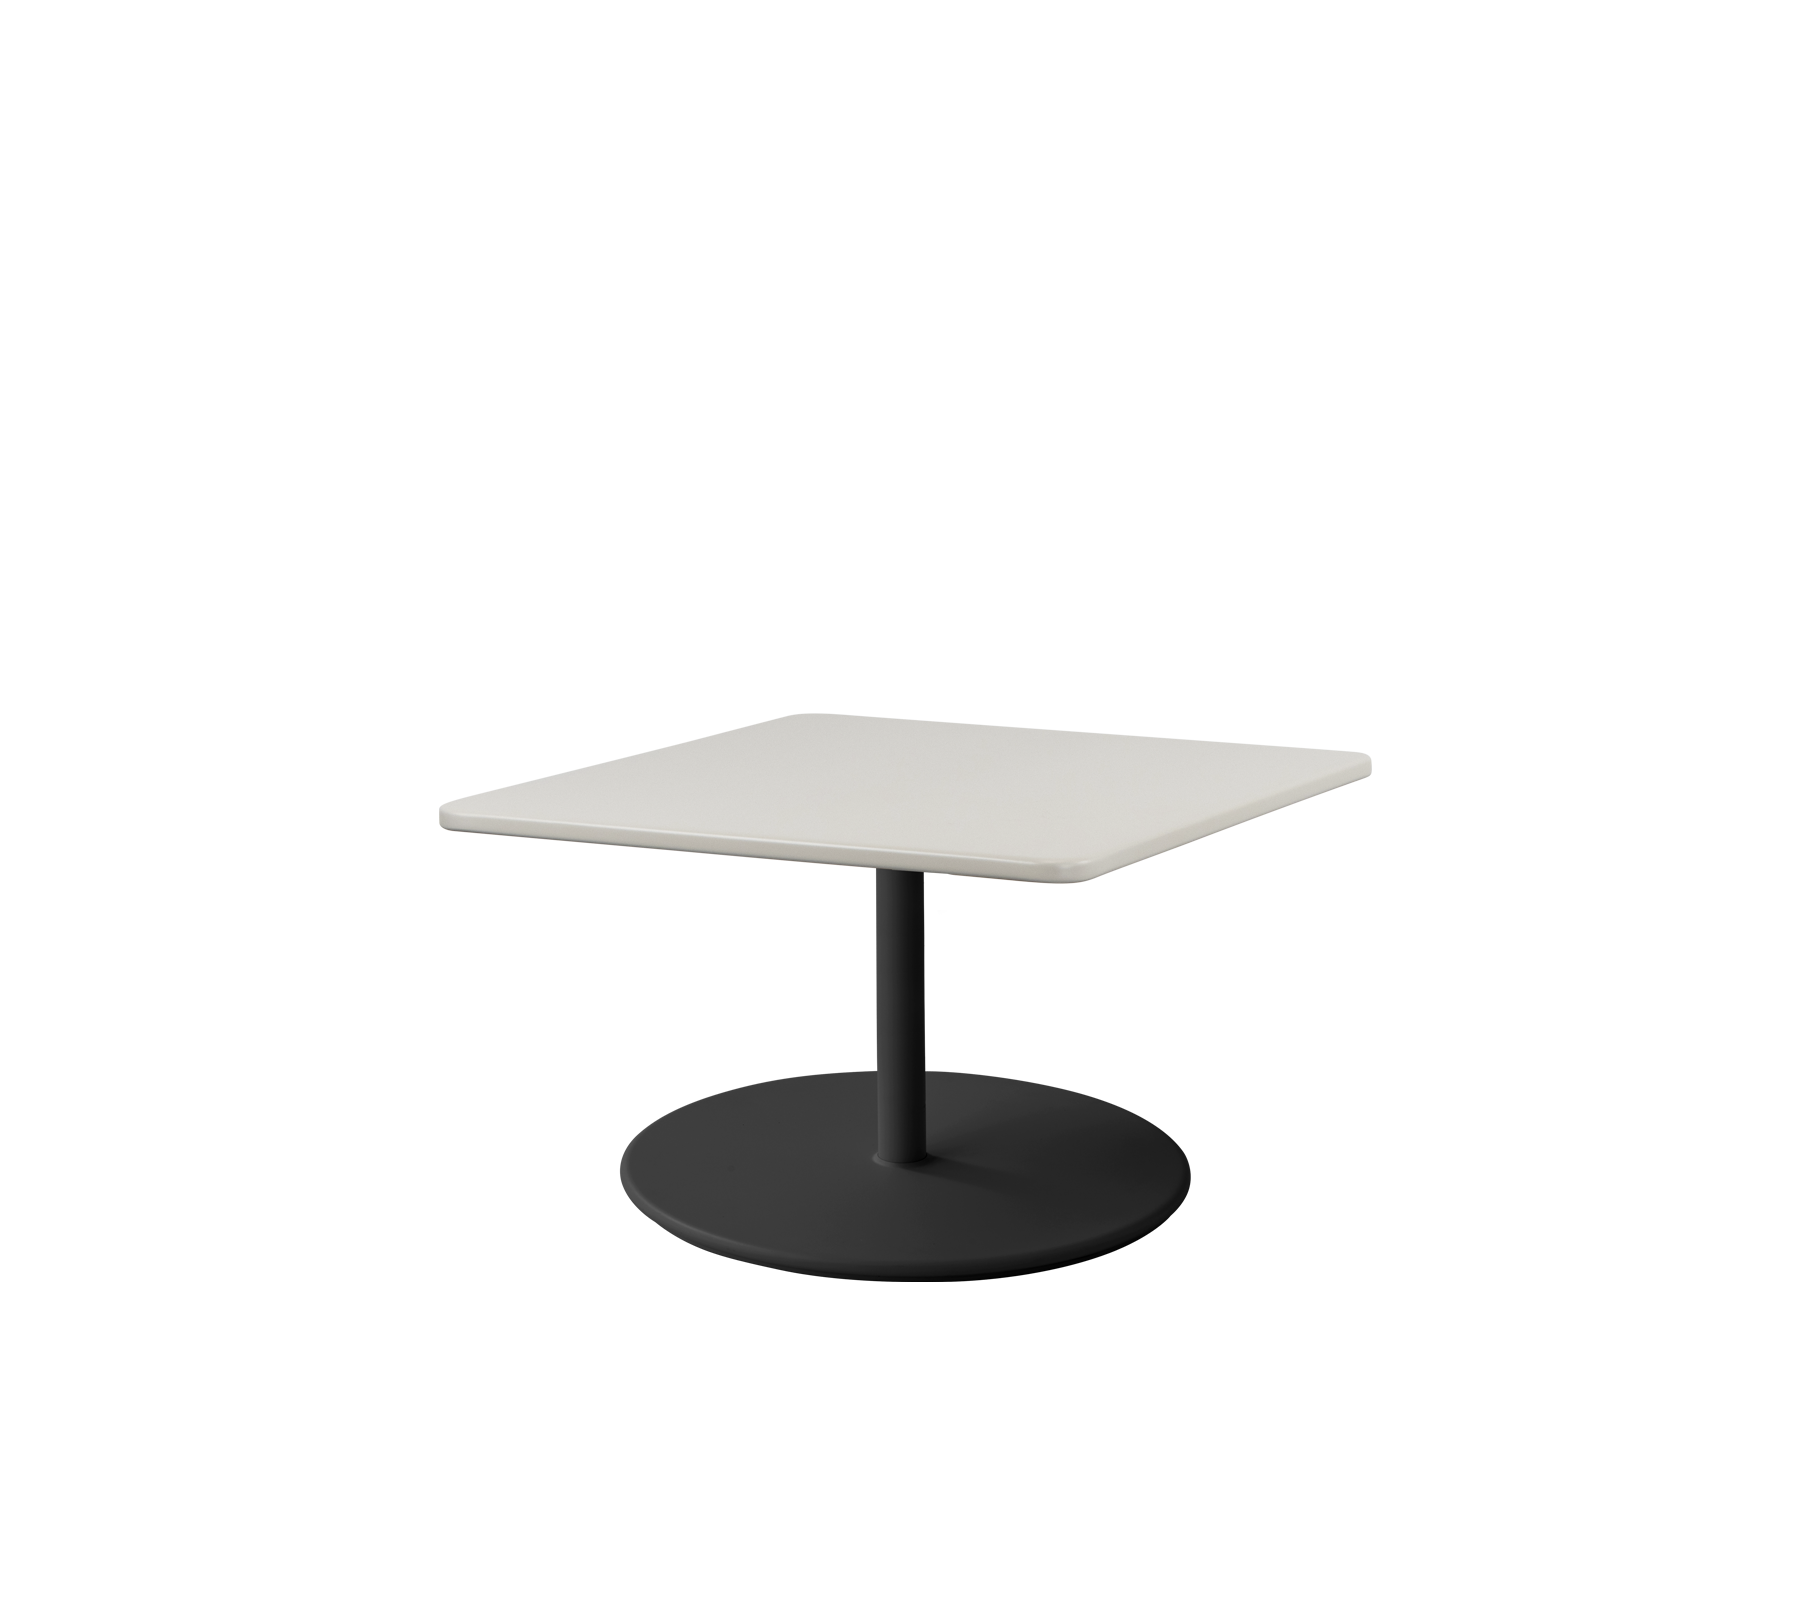 Go coffee table, large 75x75 cm